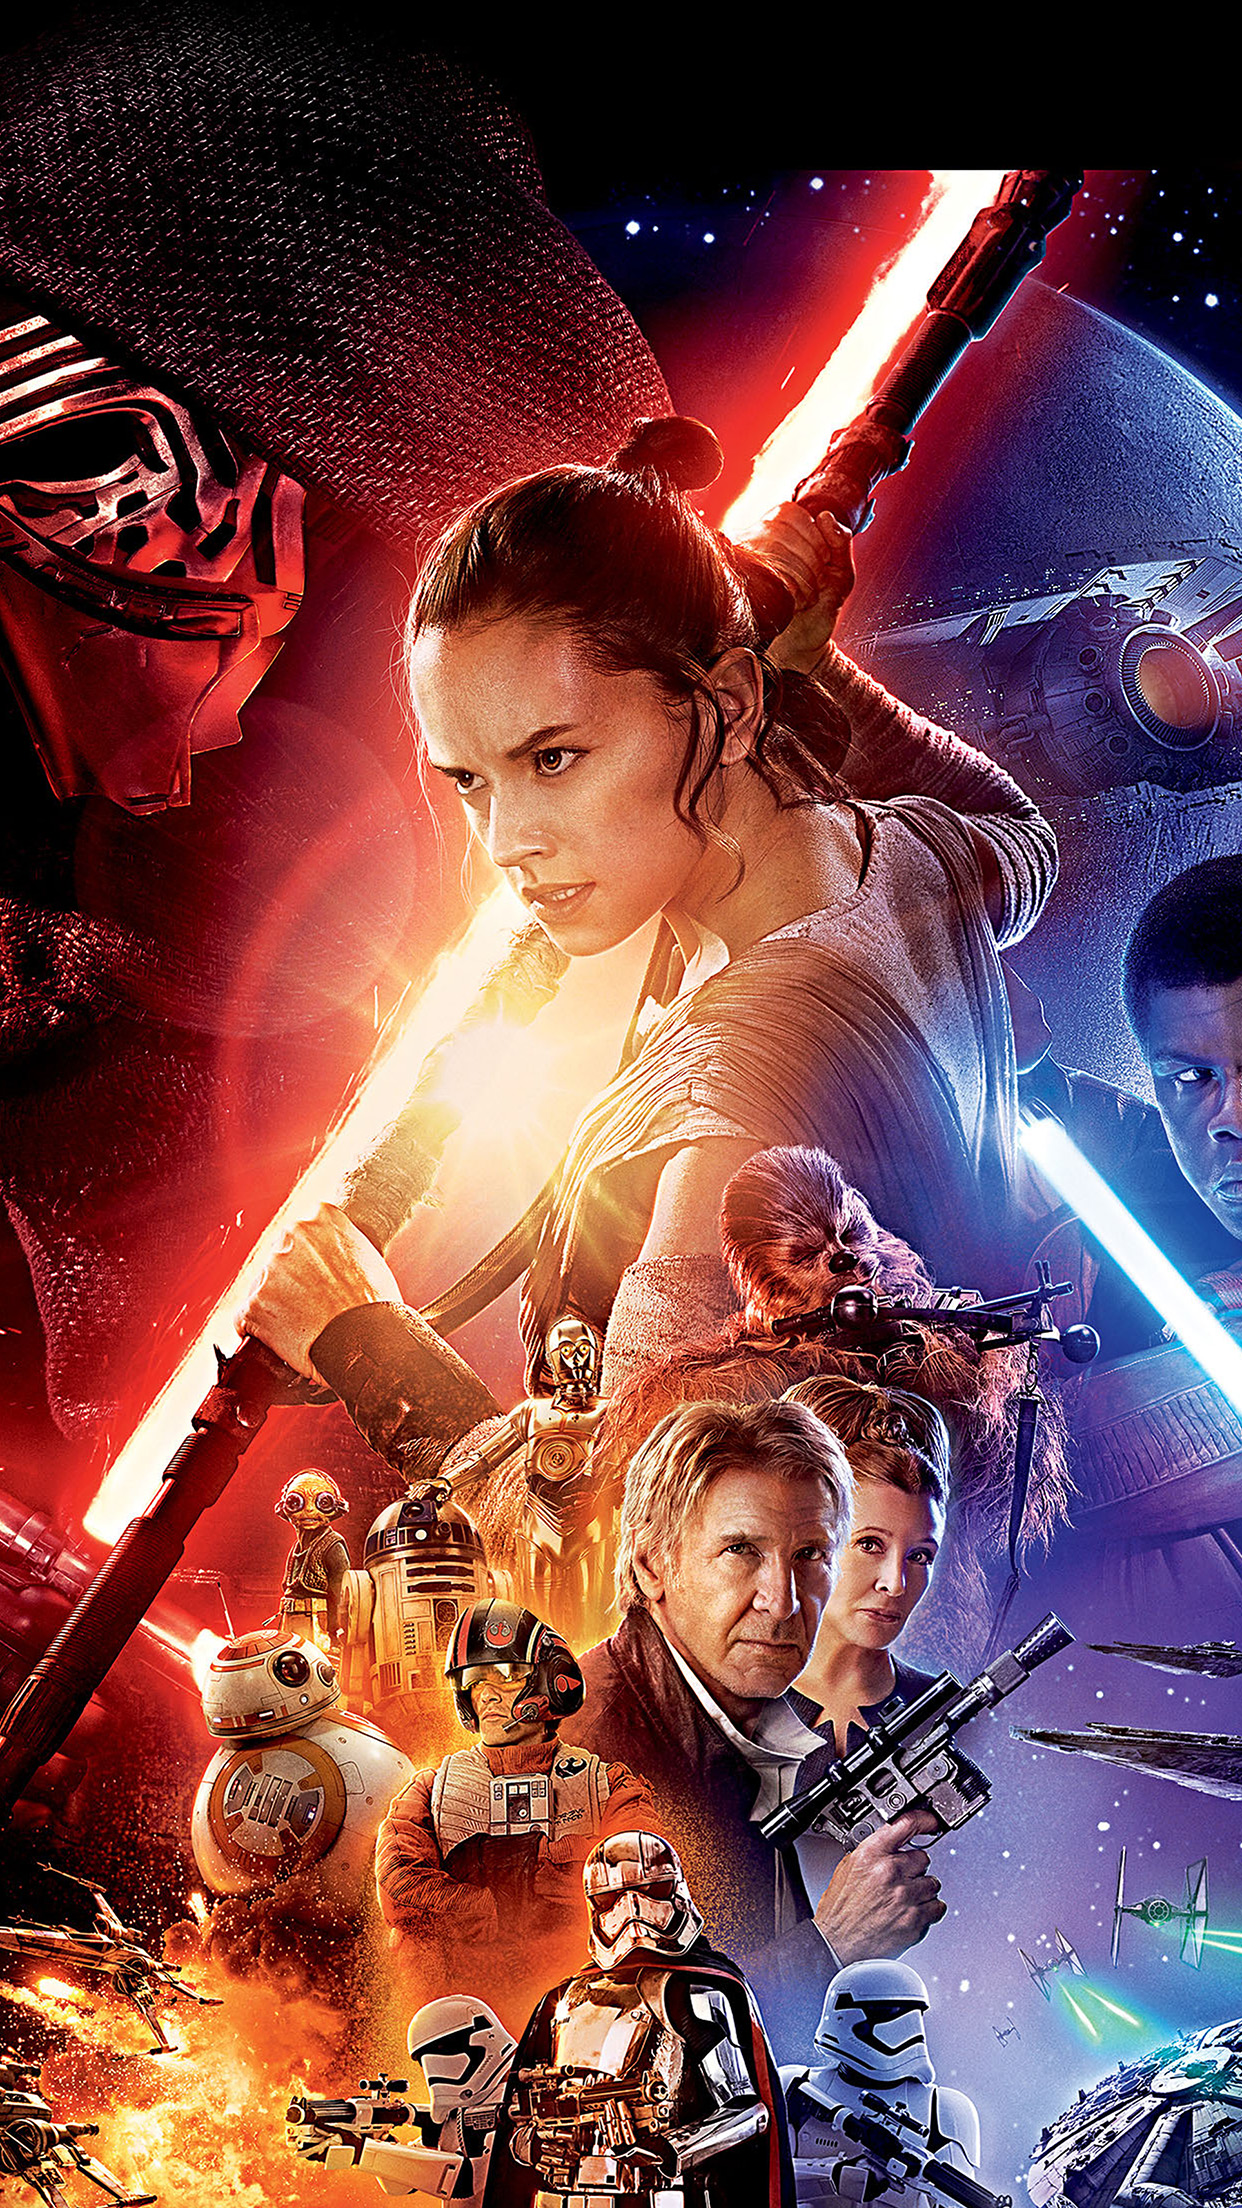 Starwars The Force Awakens Film Poster Art Android wallpaper